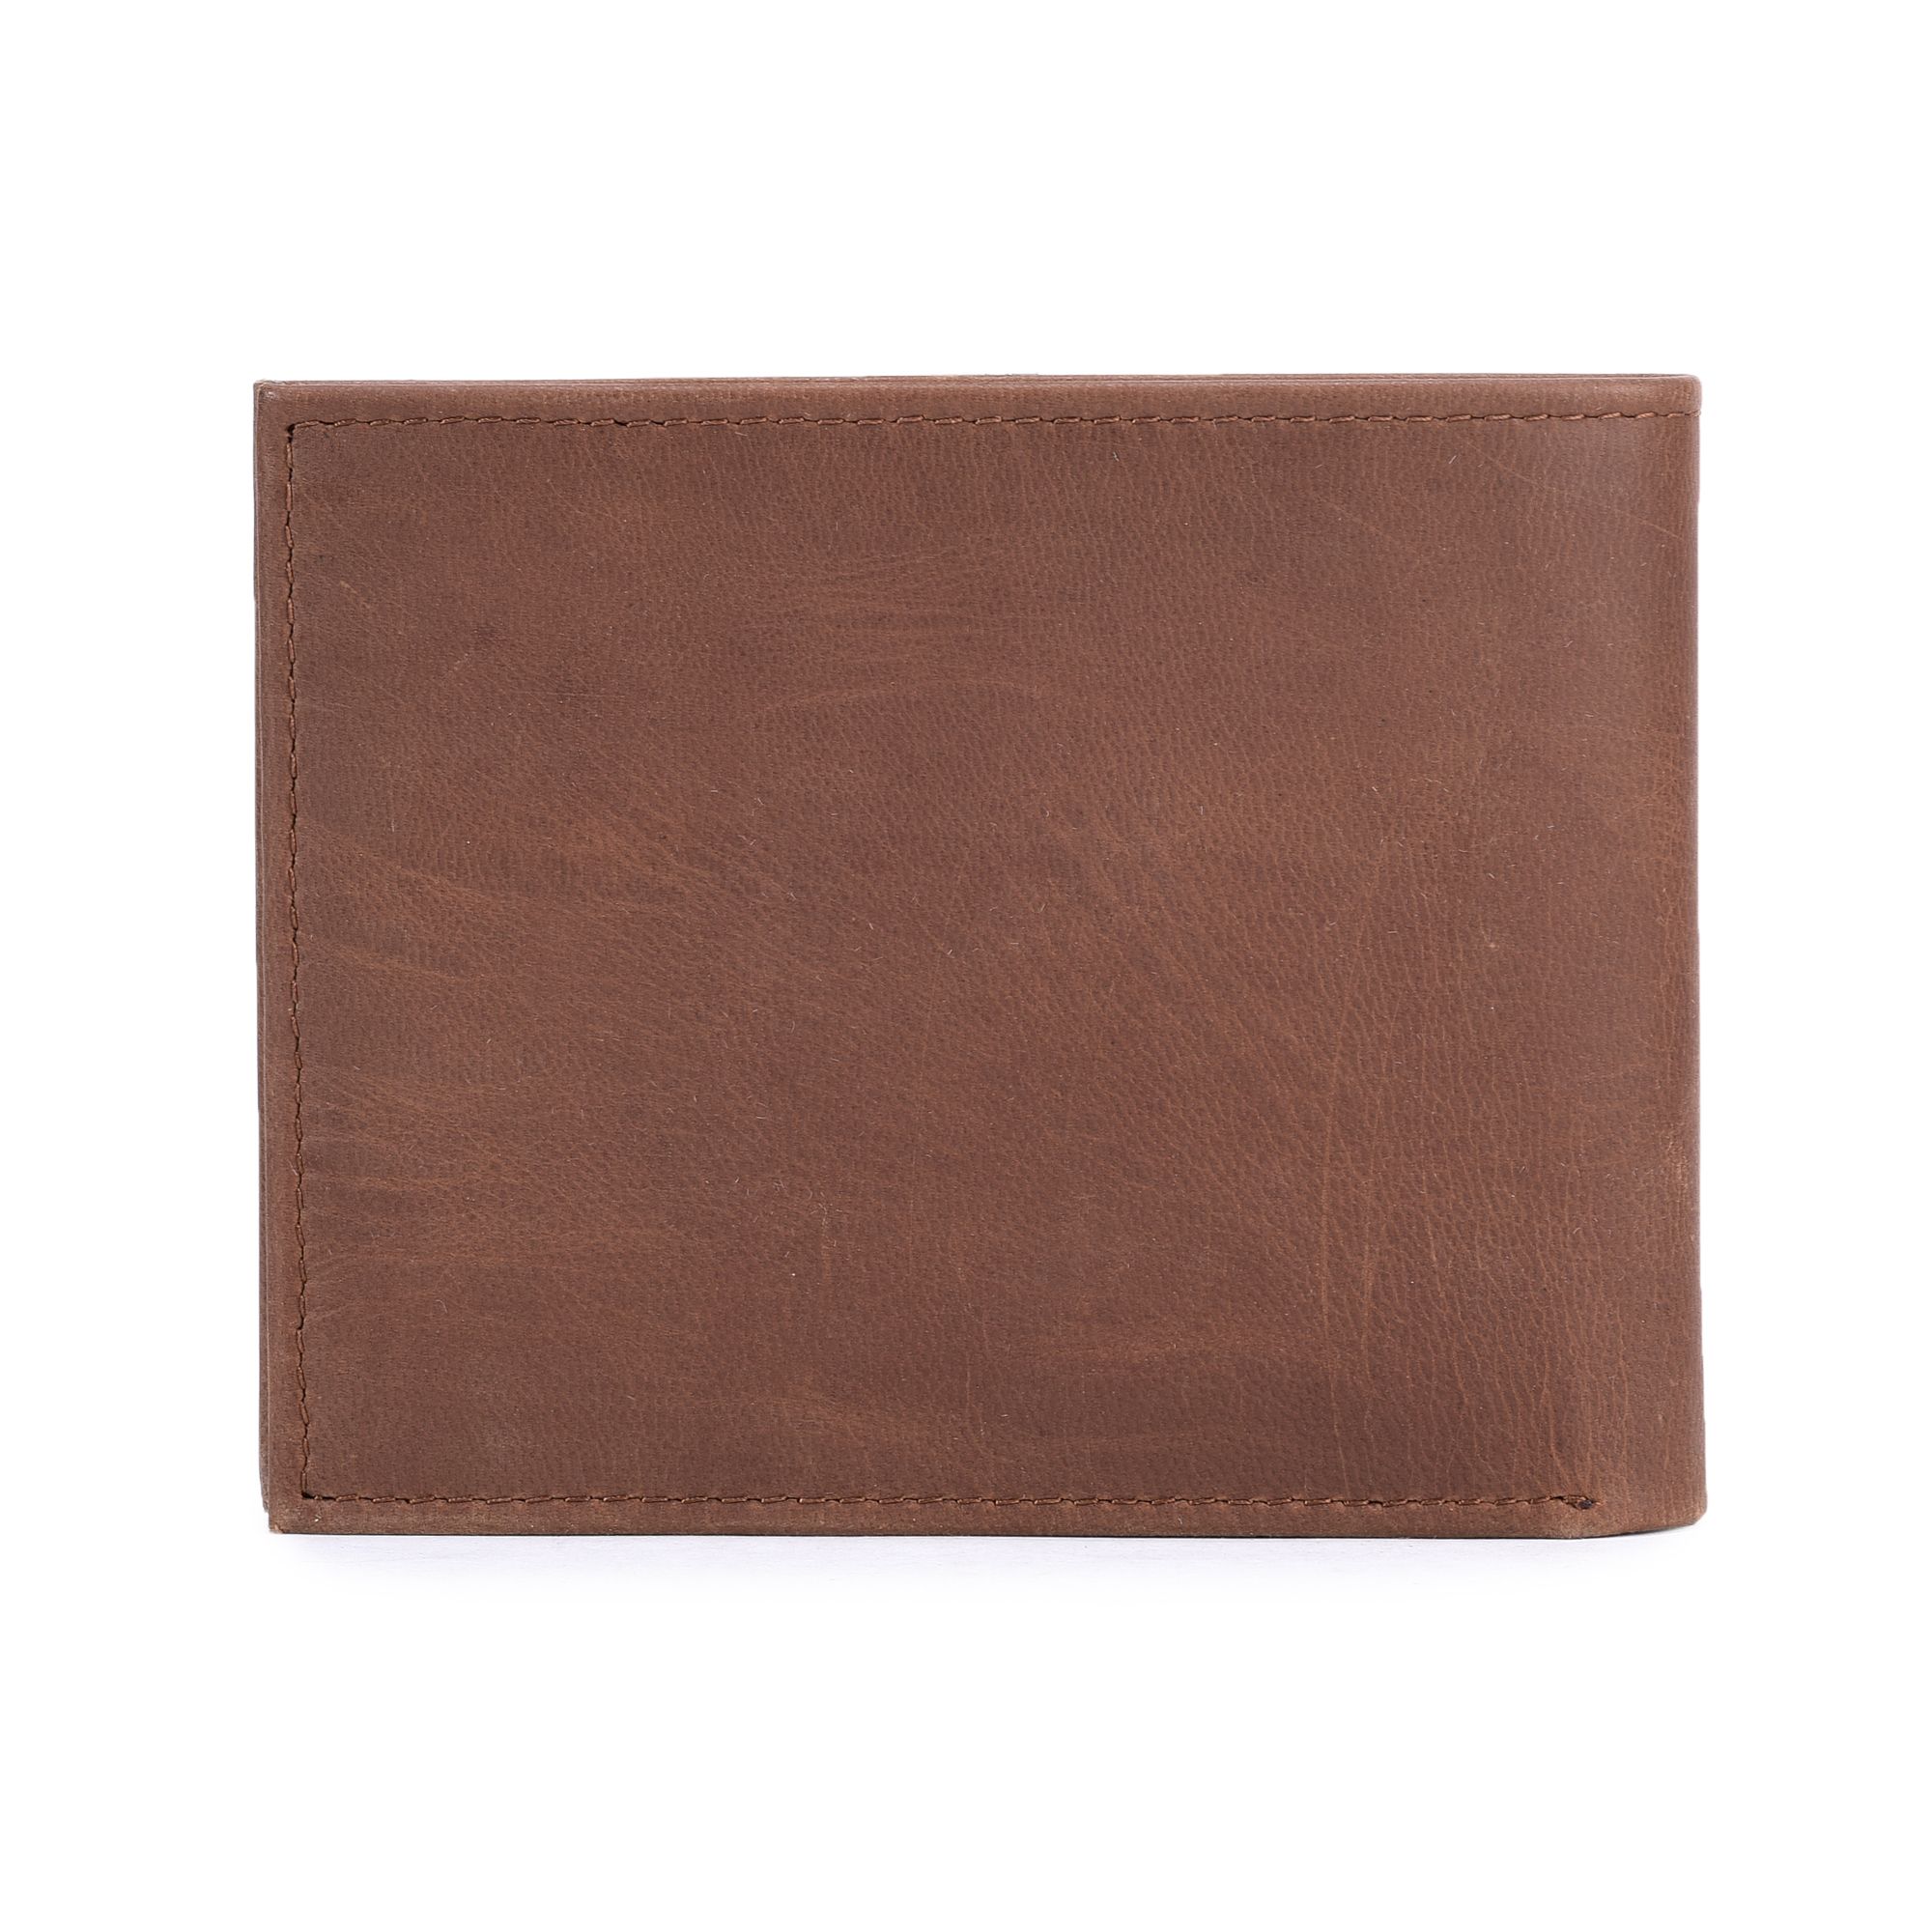 TAN Leather Wallet For Men